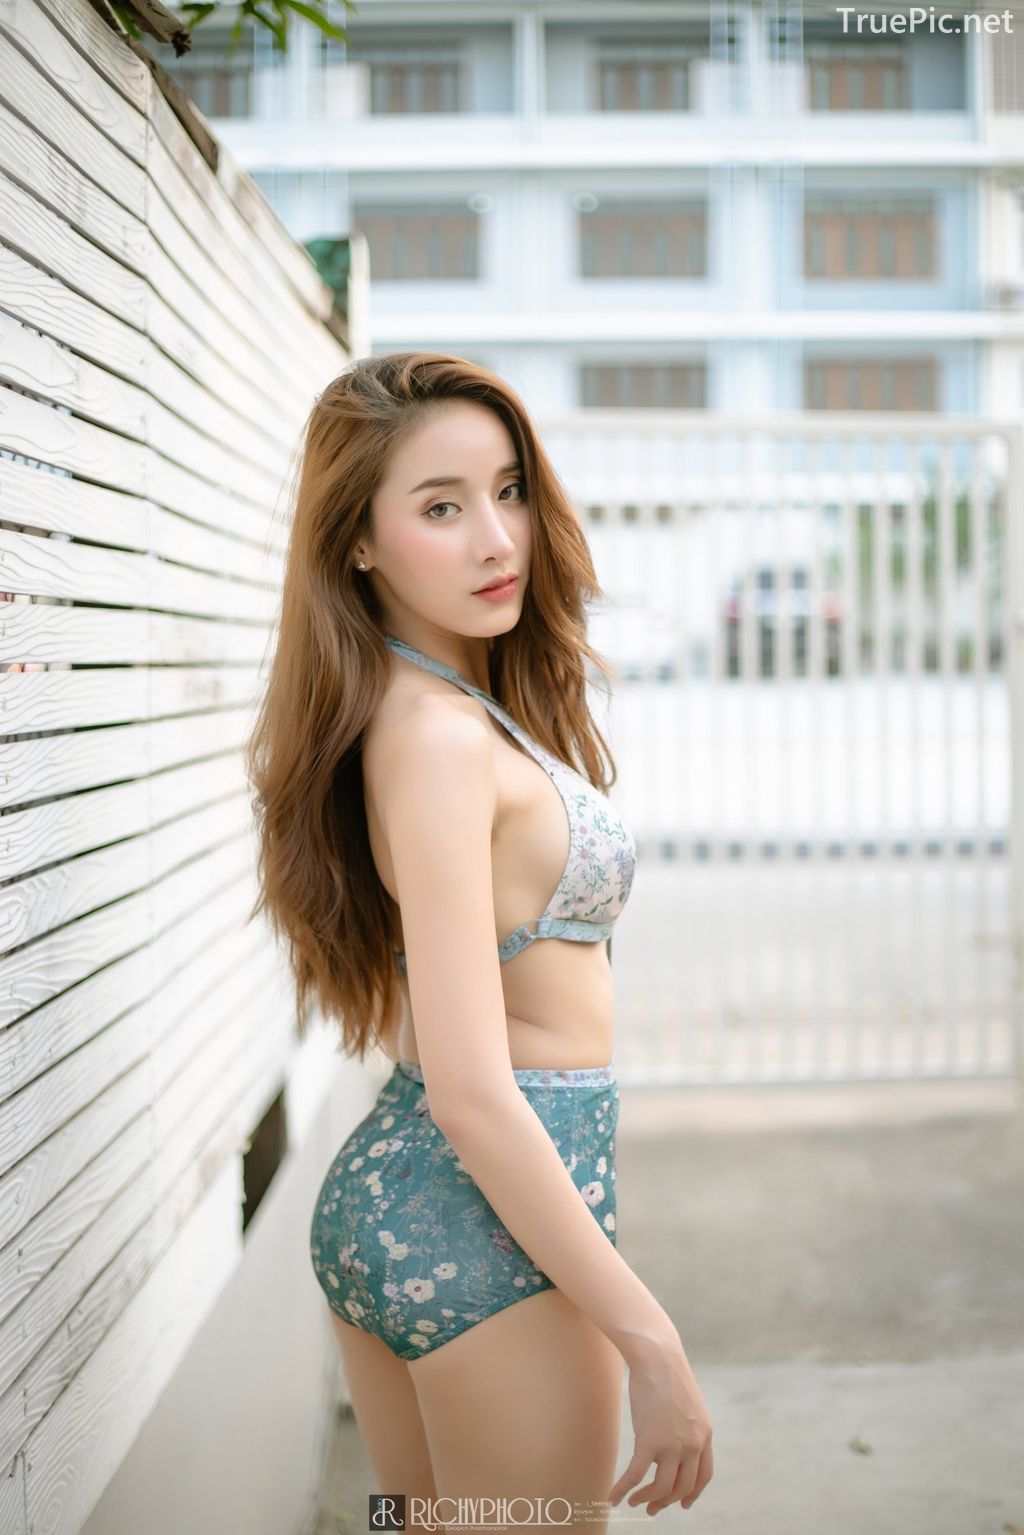 Image-Thailand-Sexy-Model-Pichana-Yoosuk-Album-Remember-The-Sea-TruePic.net- Picture-25